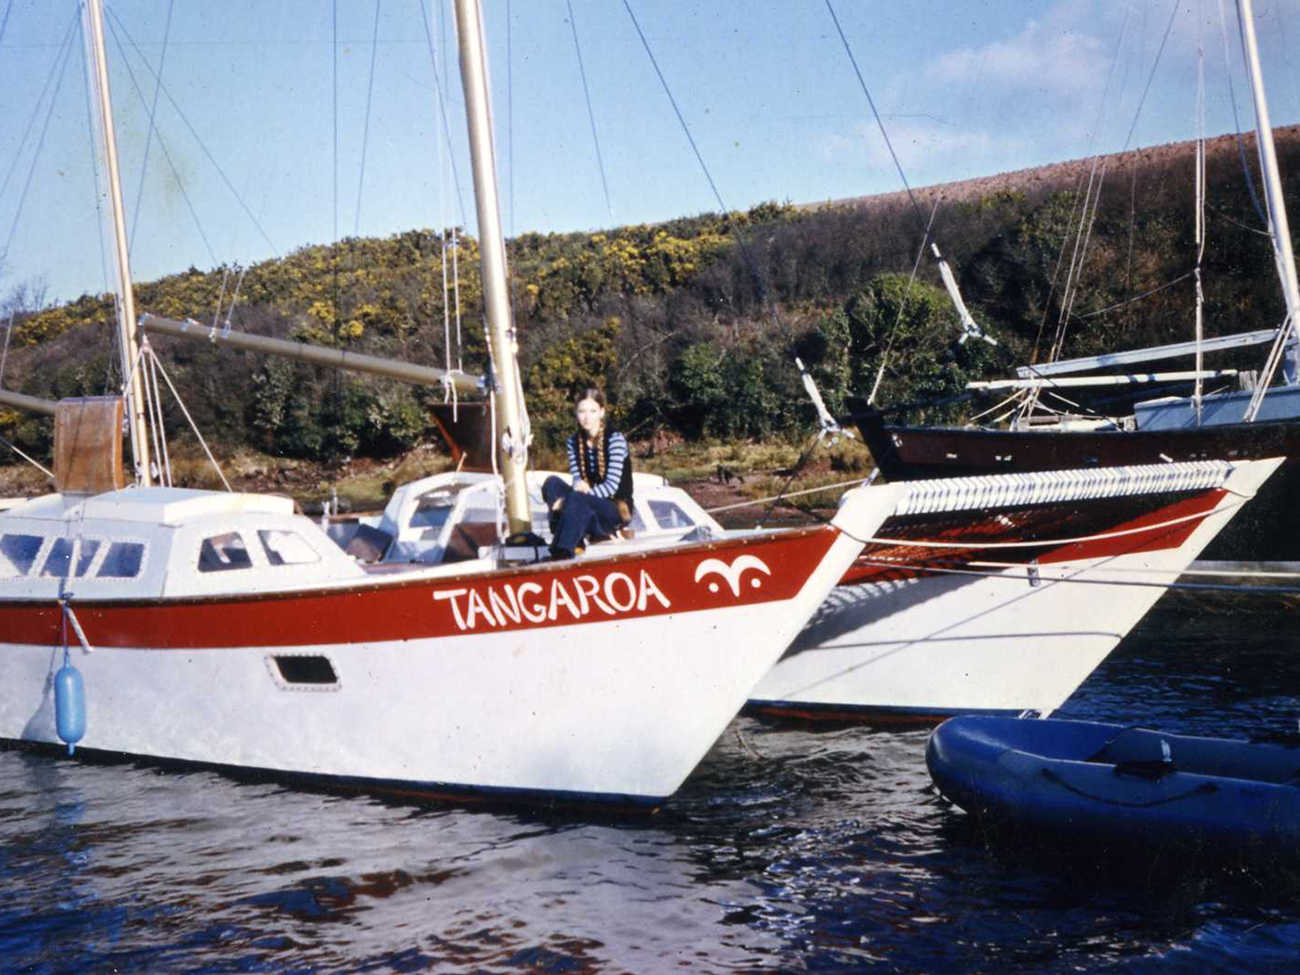 Tangaroa at anchor, eye symbol painted on hull, one woman aboard